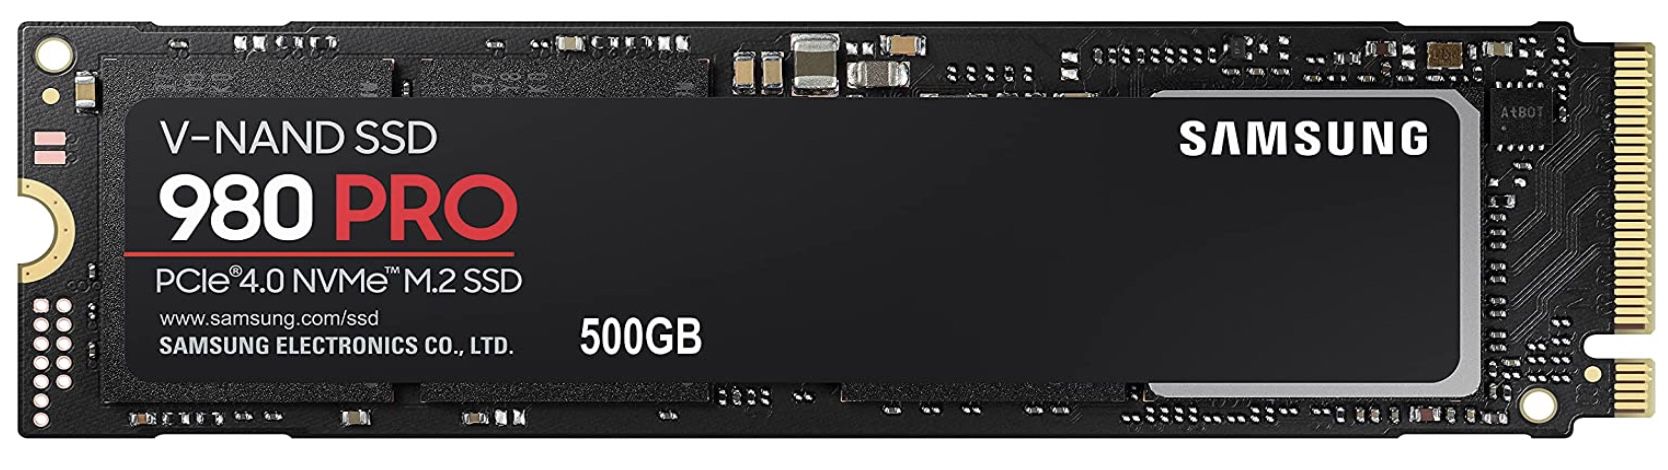 Samsung 980 PRO NVMe SSD M.2 mit 500 GB (PS5 kompatibel) für 89€ (statt 109€)